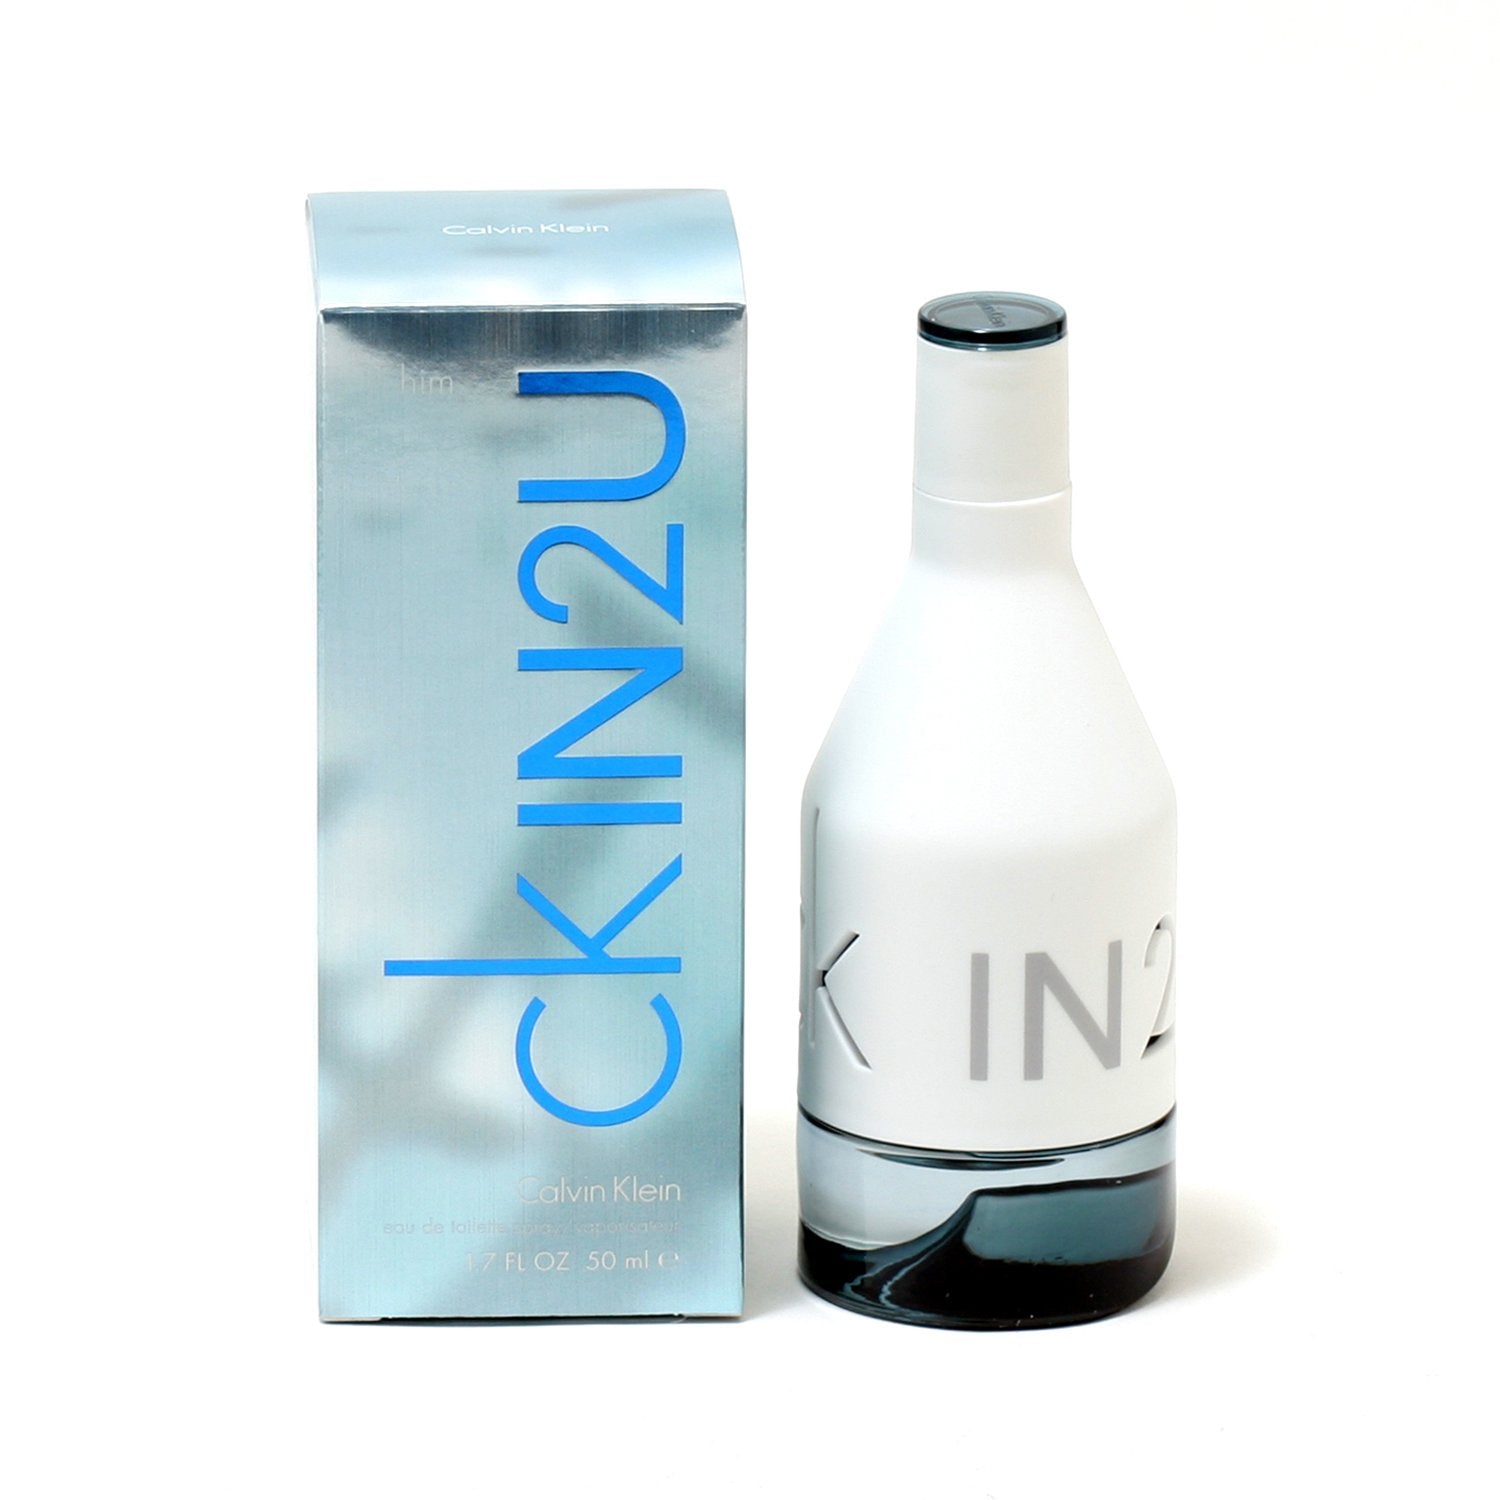 CK Products - Squeeze Bottle - 3 oz